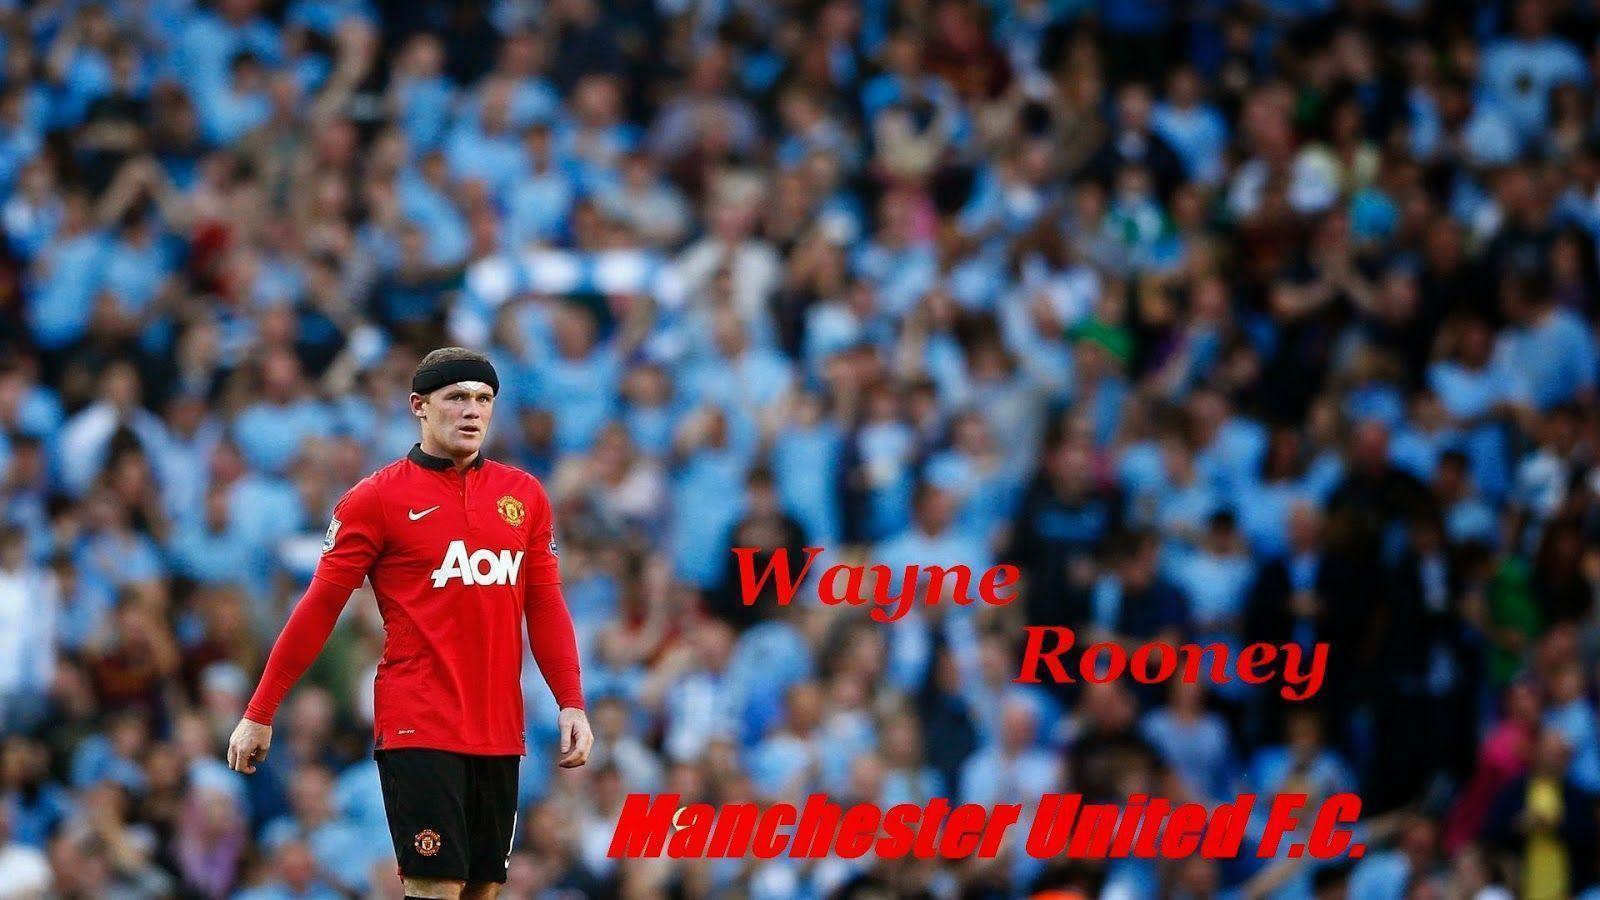 Wallpaper HD Corner: Wayne Rooney Latest HD Wallpaper 2015